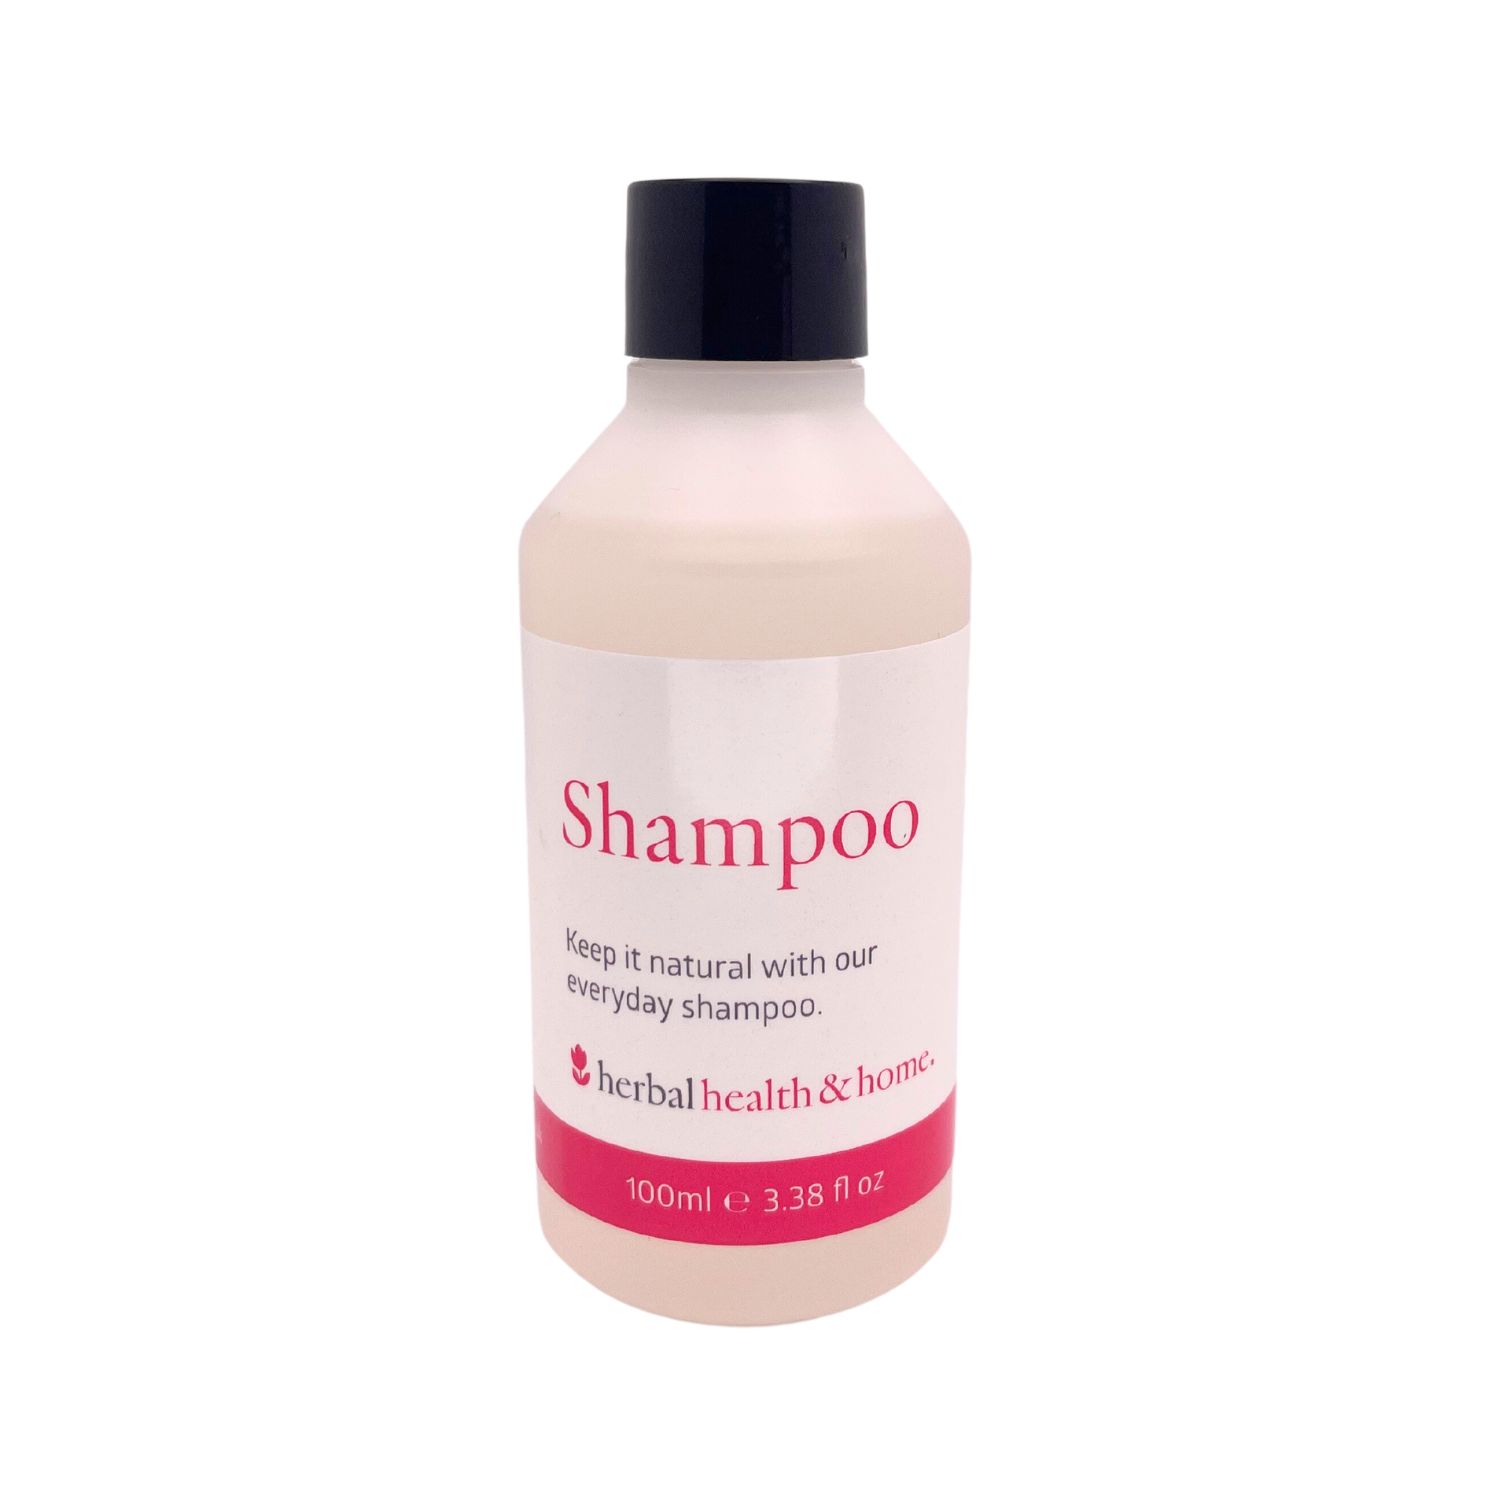 PowderPuff Shampoo 100ml | Herbal, Health & Home